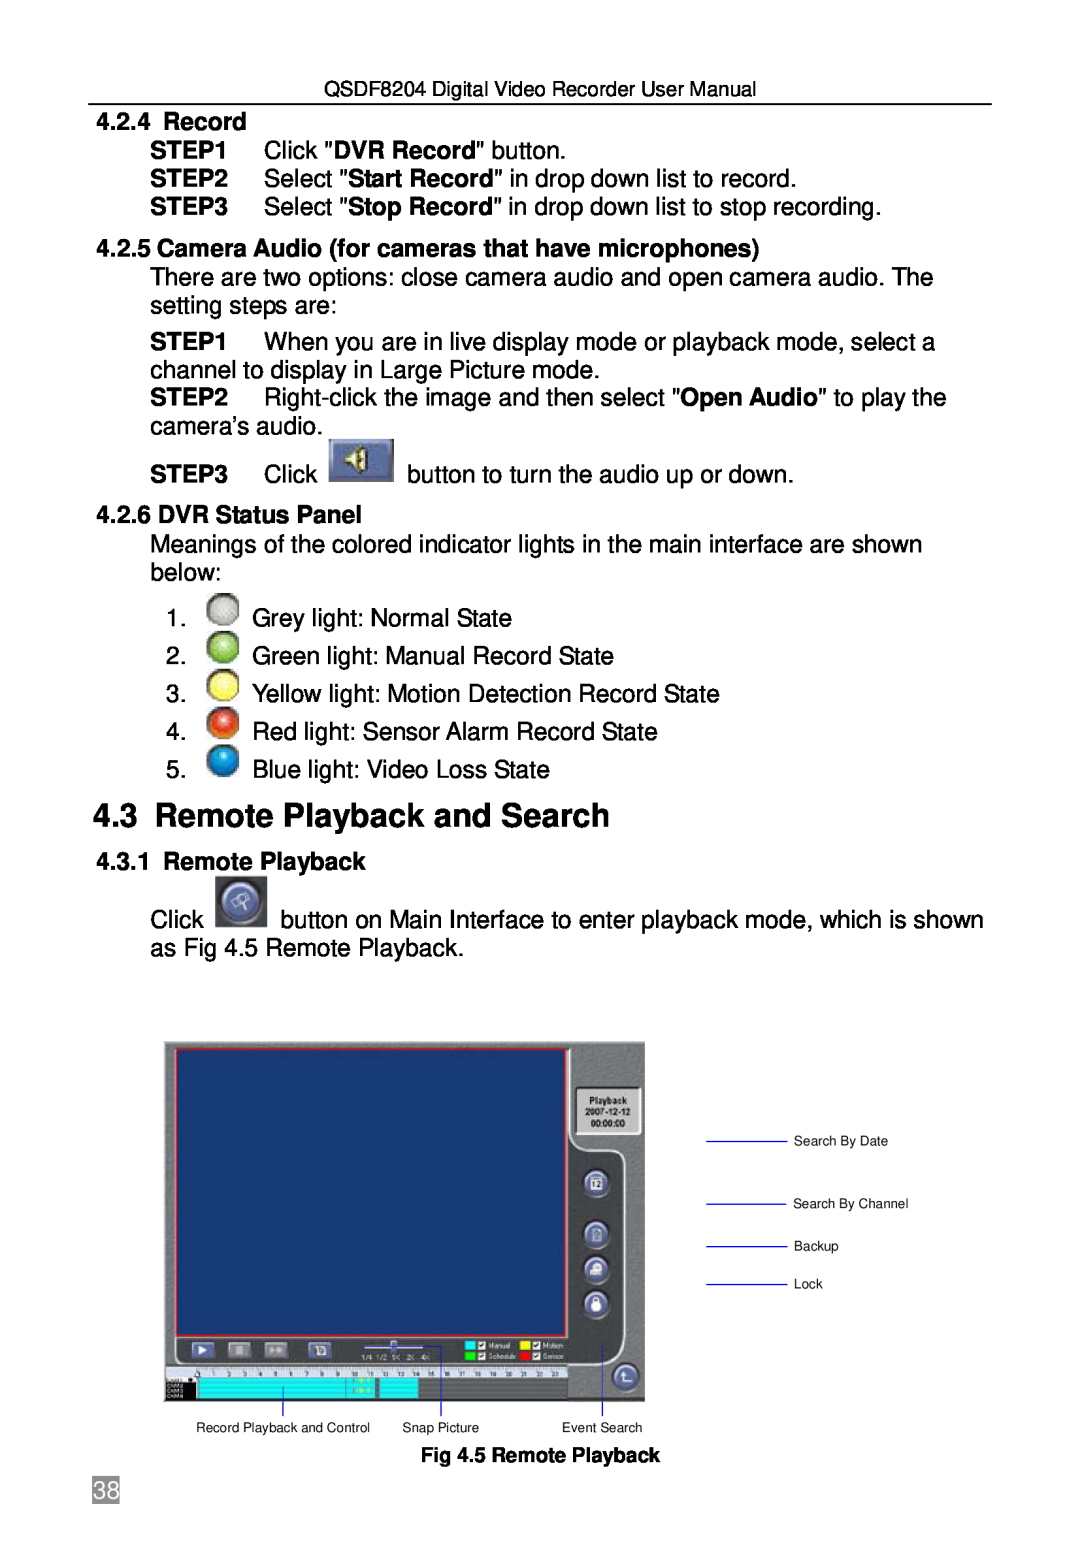 Q-See QSDF8204 4.3Remote Playback and Search, Record Click DVR Record button, DVR Status Panel, 4.3.1Remote Playback 